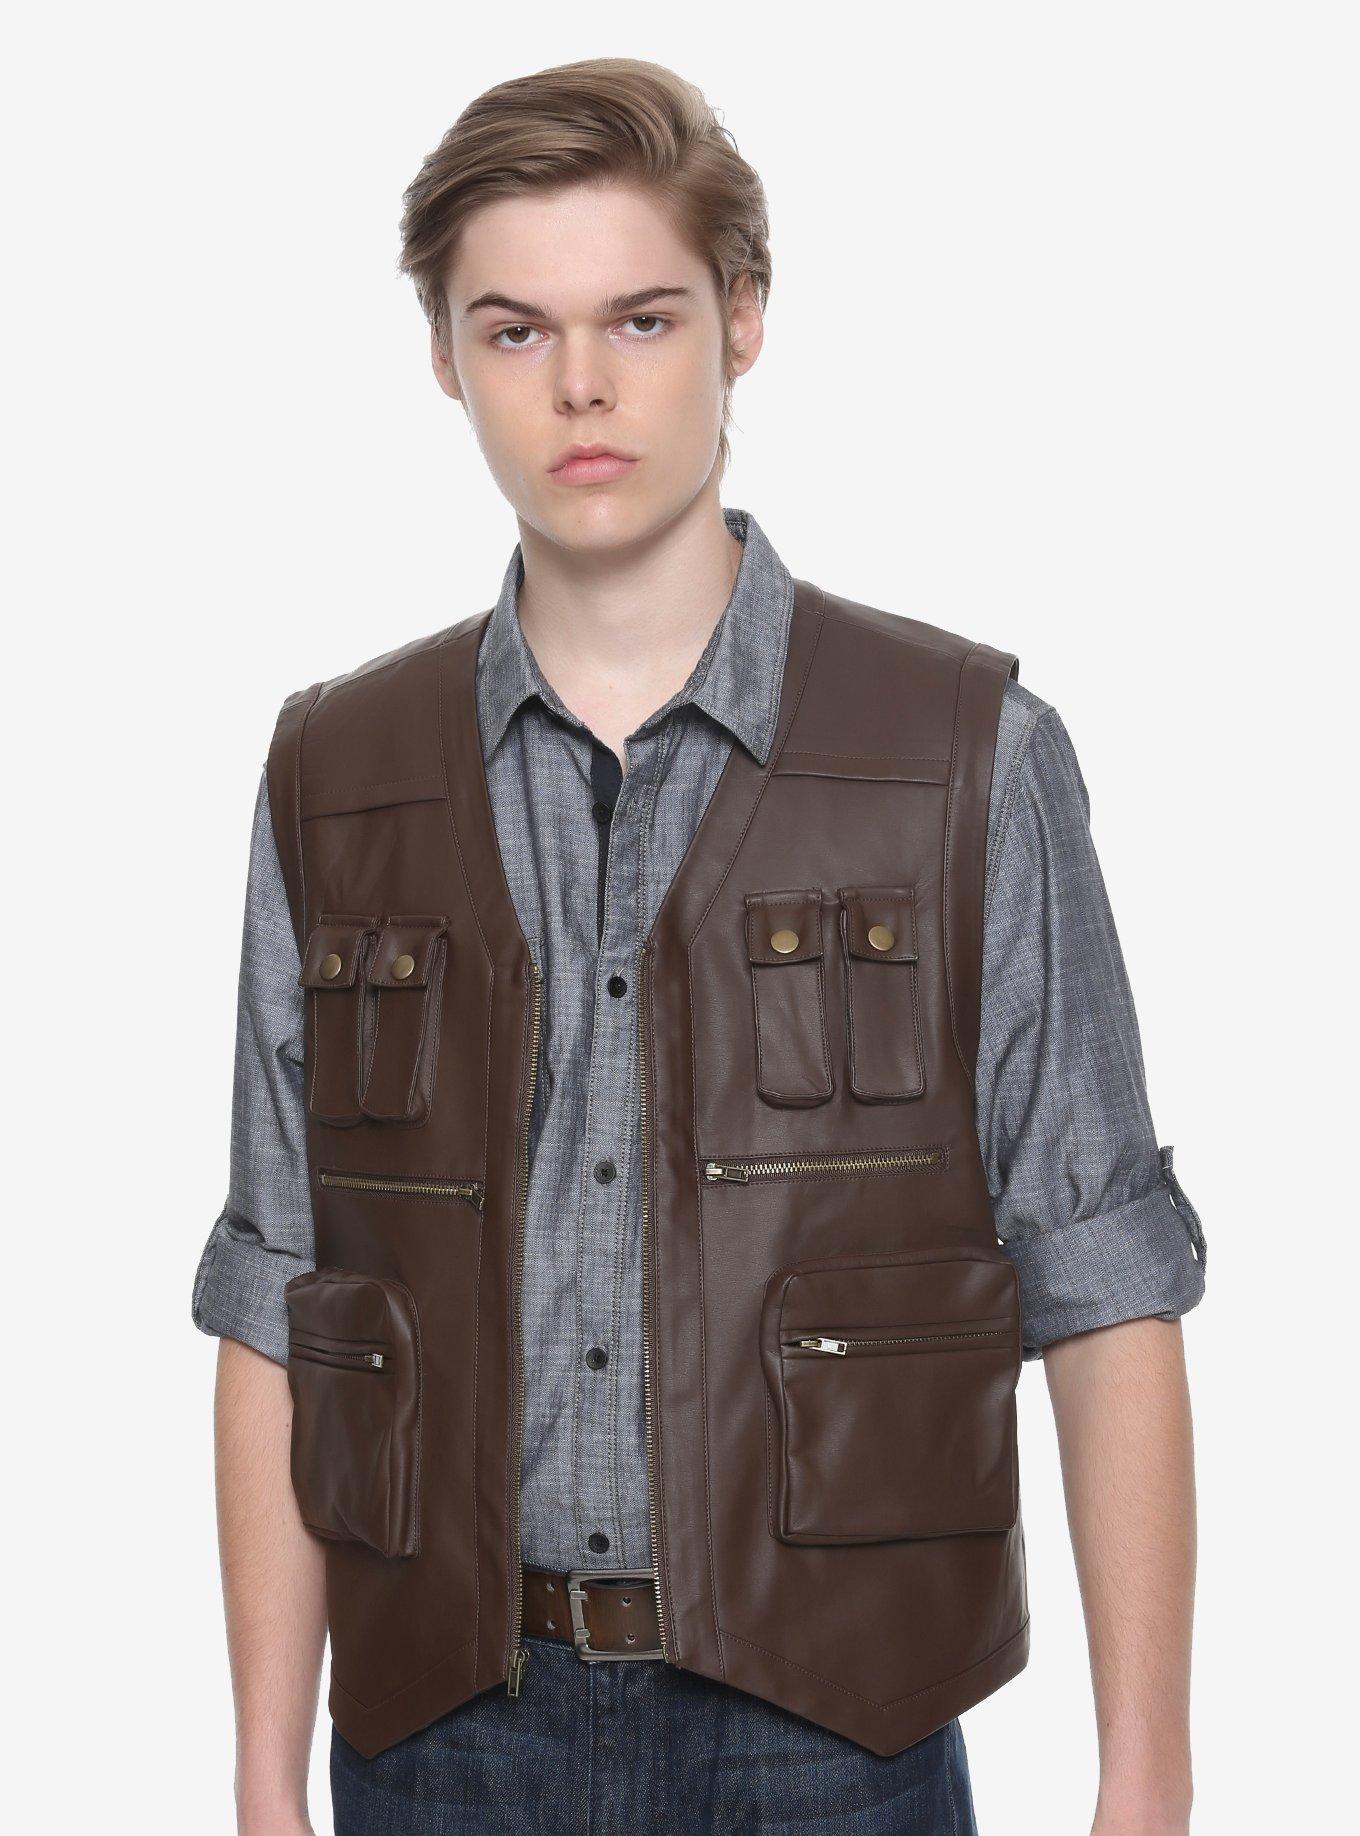 Jurassic Park Owen Grady Cosplay Vest, BLACK, hi-res